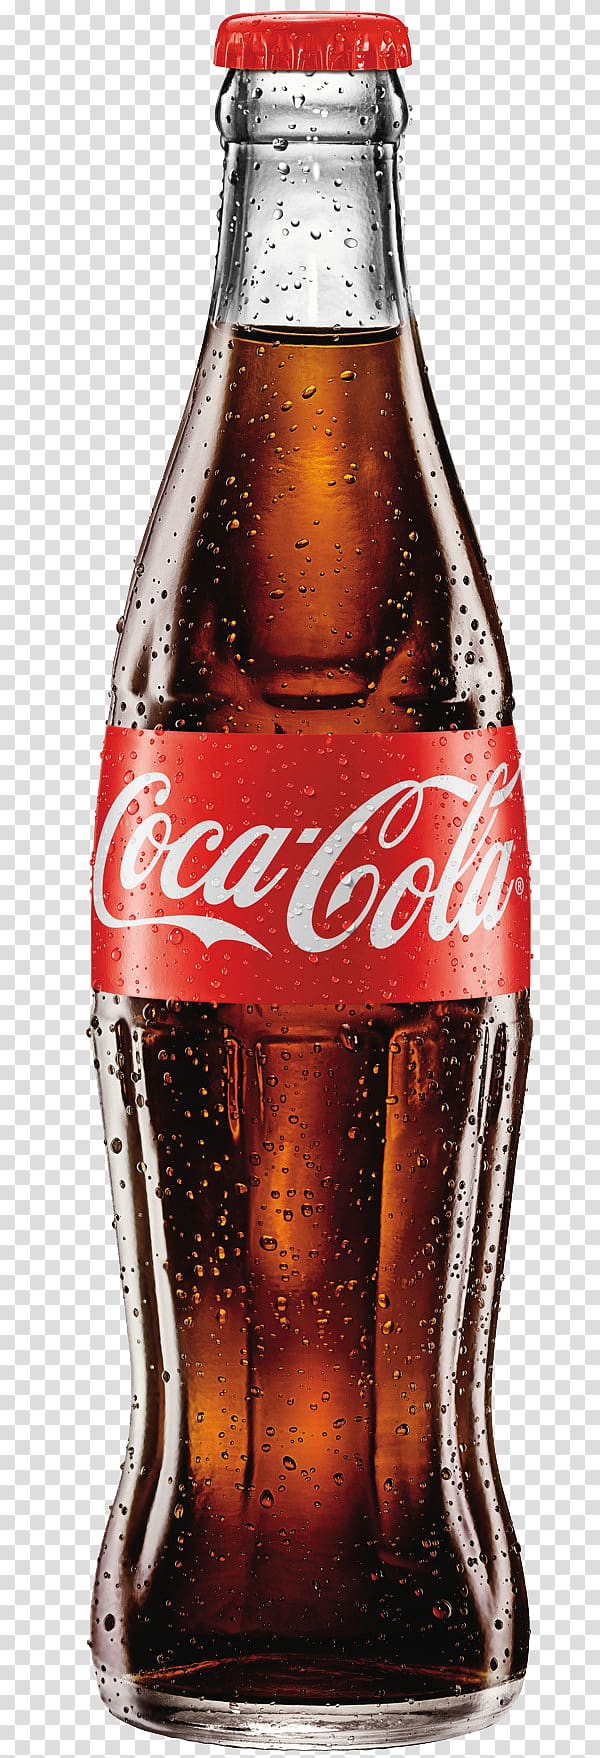 Caffeine-Free Coca-Cola Soft drink, Coca Cola, Coca-Cola bottle transparent background PNG clipart